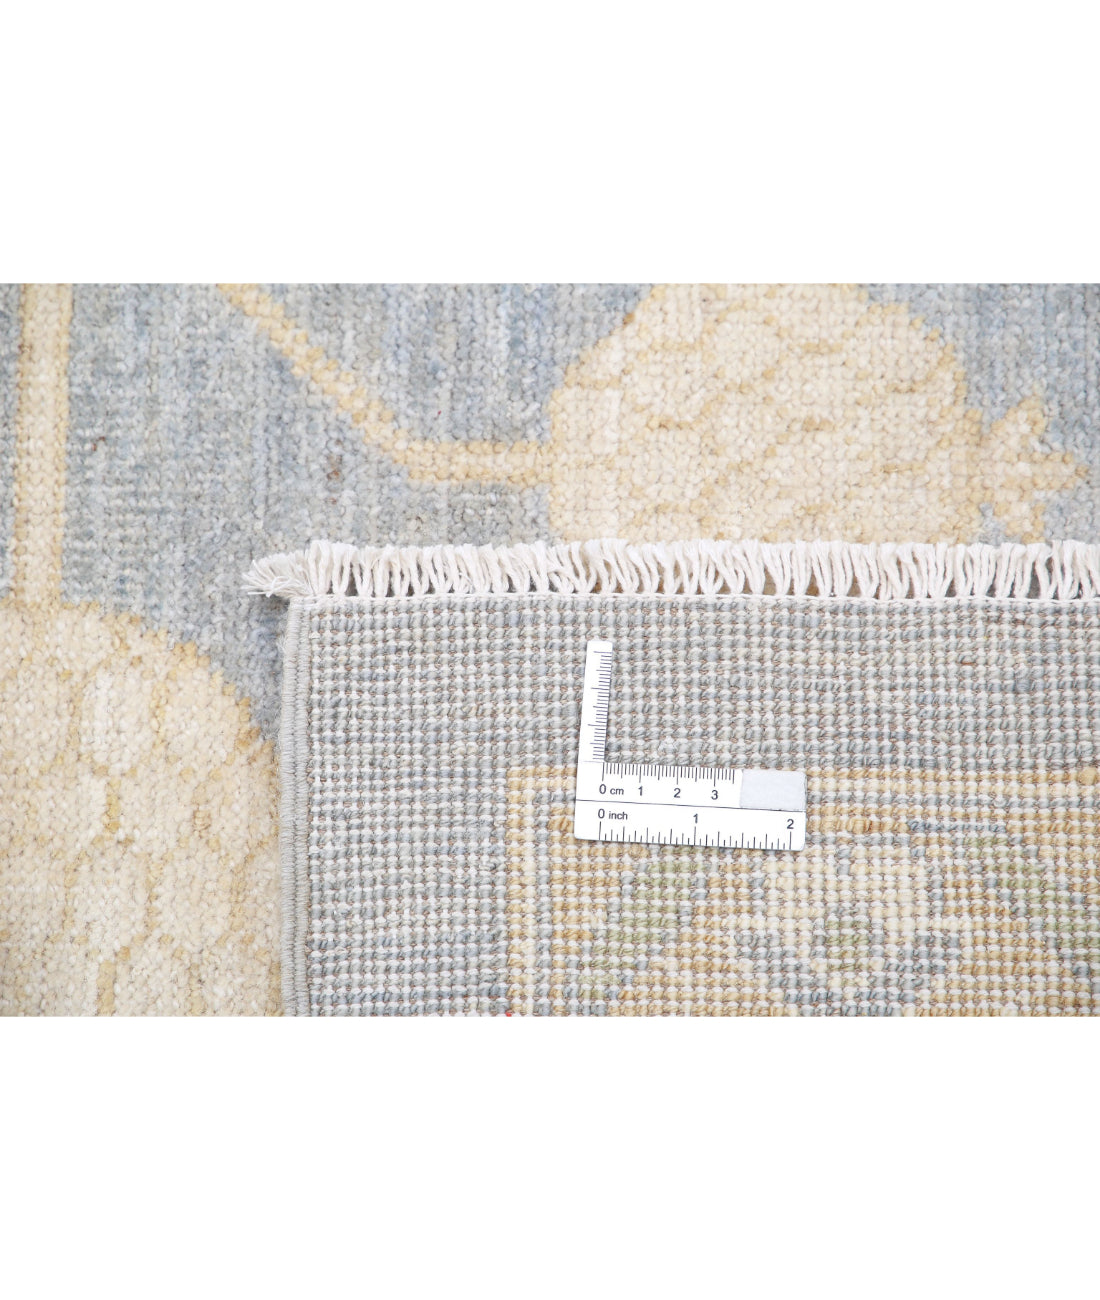 Hand Knotted Khotan Wool Rug - 11'10'' x 14'0'' 11'10'' x 14'0'' (355 X 420) / Grey / Ivory